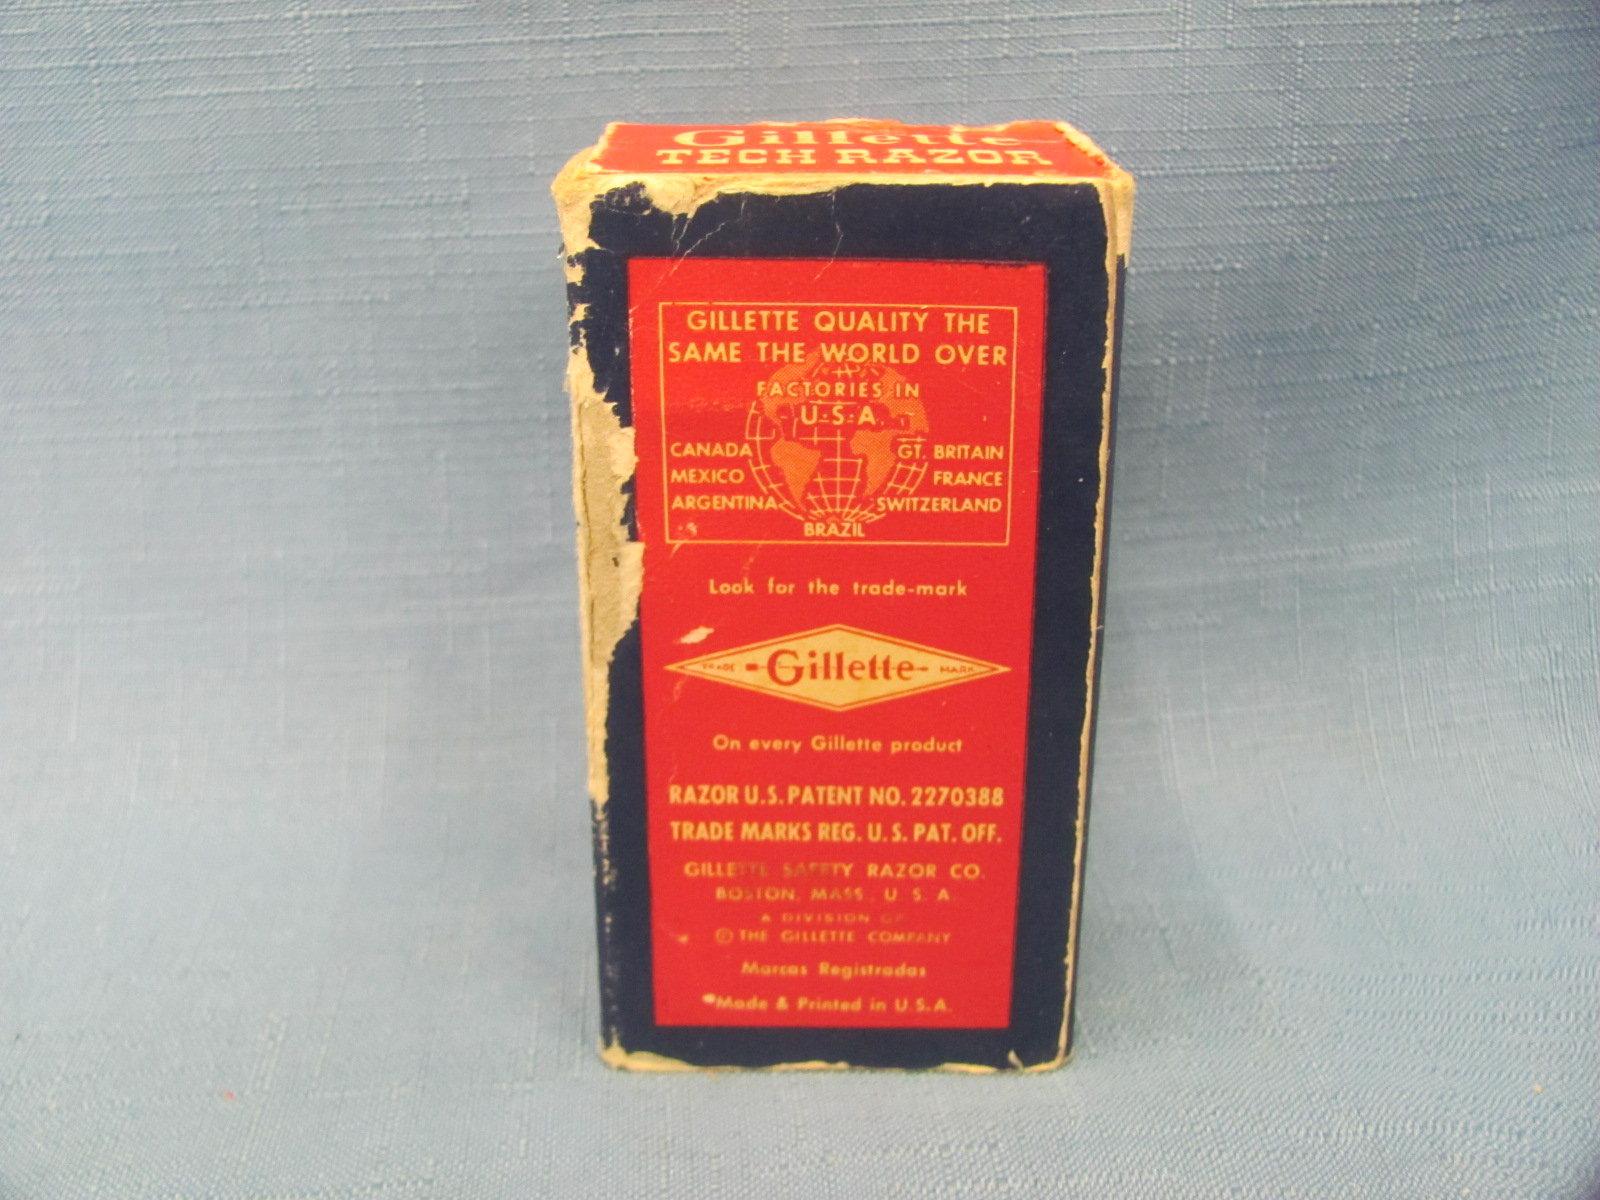 1952 Gillette Tech Razor With Blades – Original Box – Light Wear - Needs Cleaning